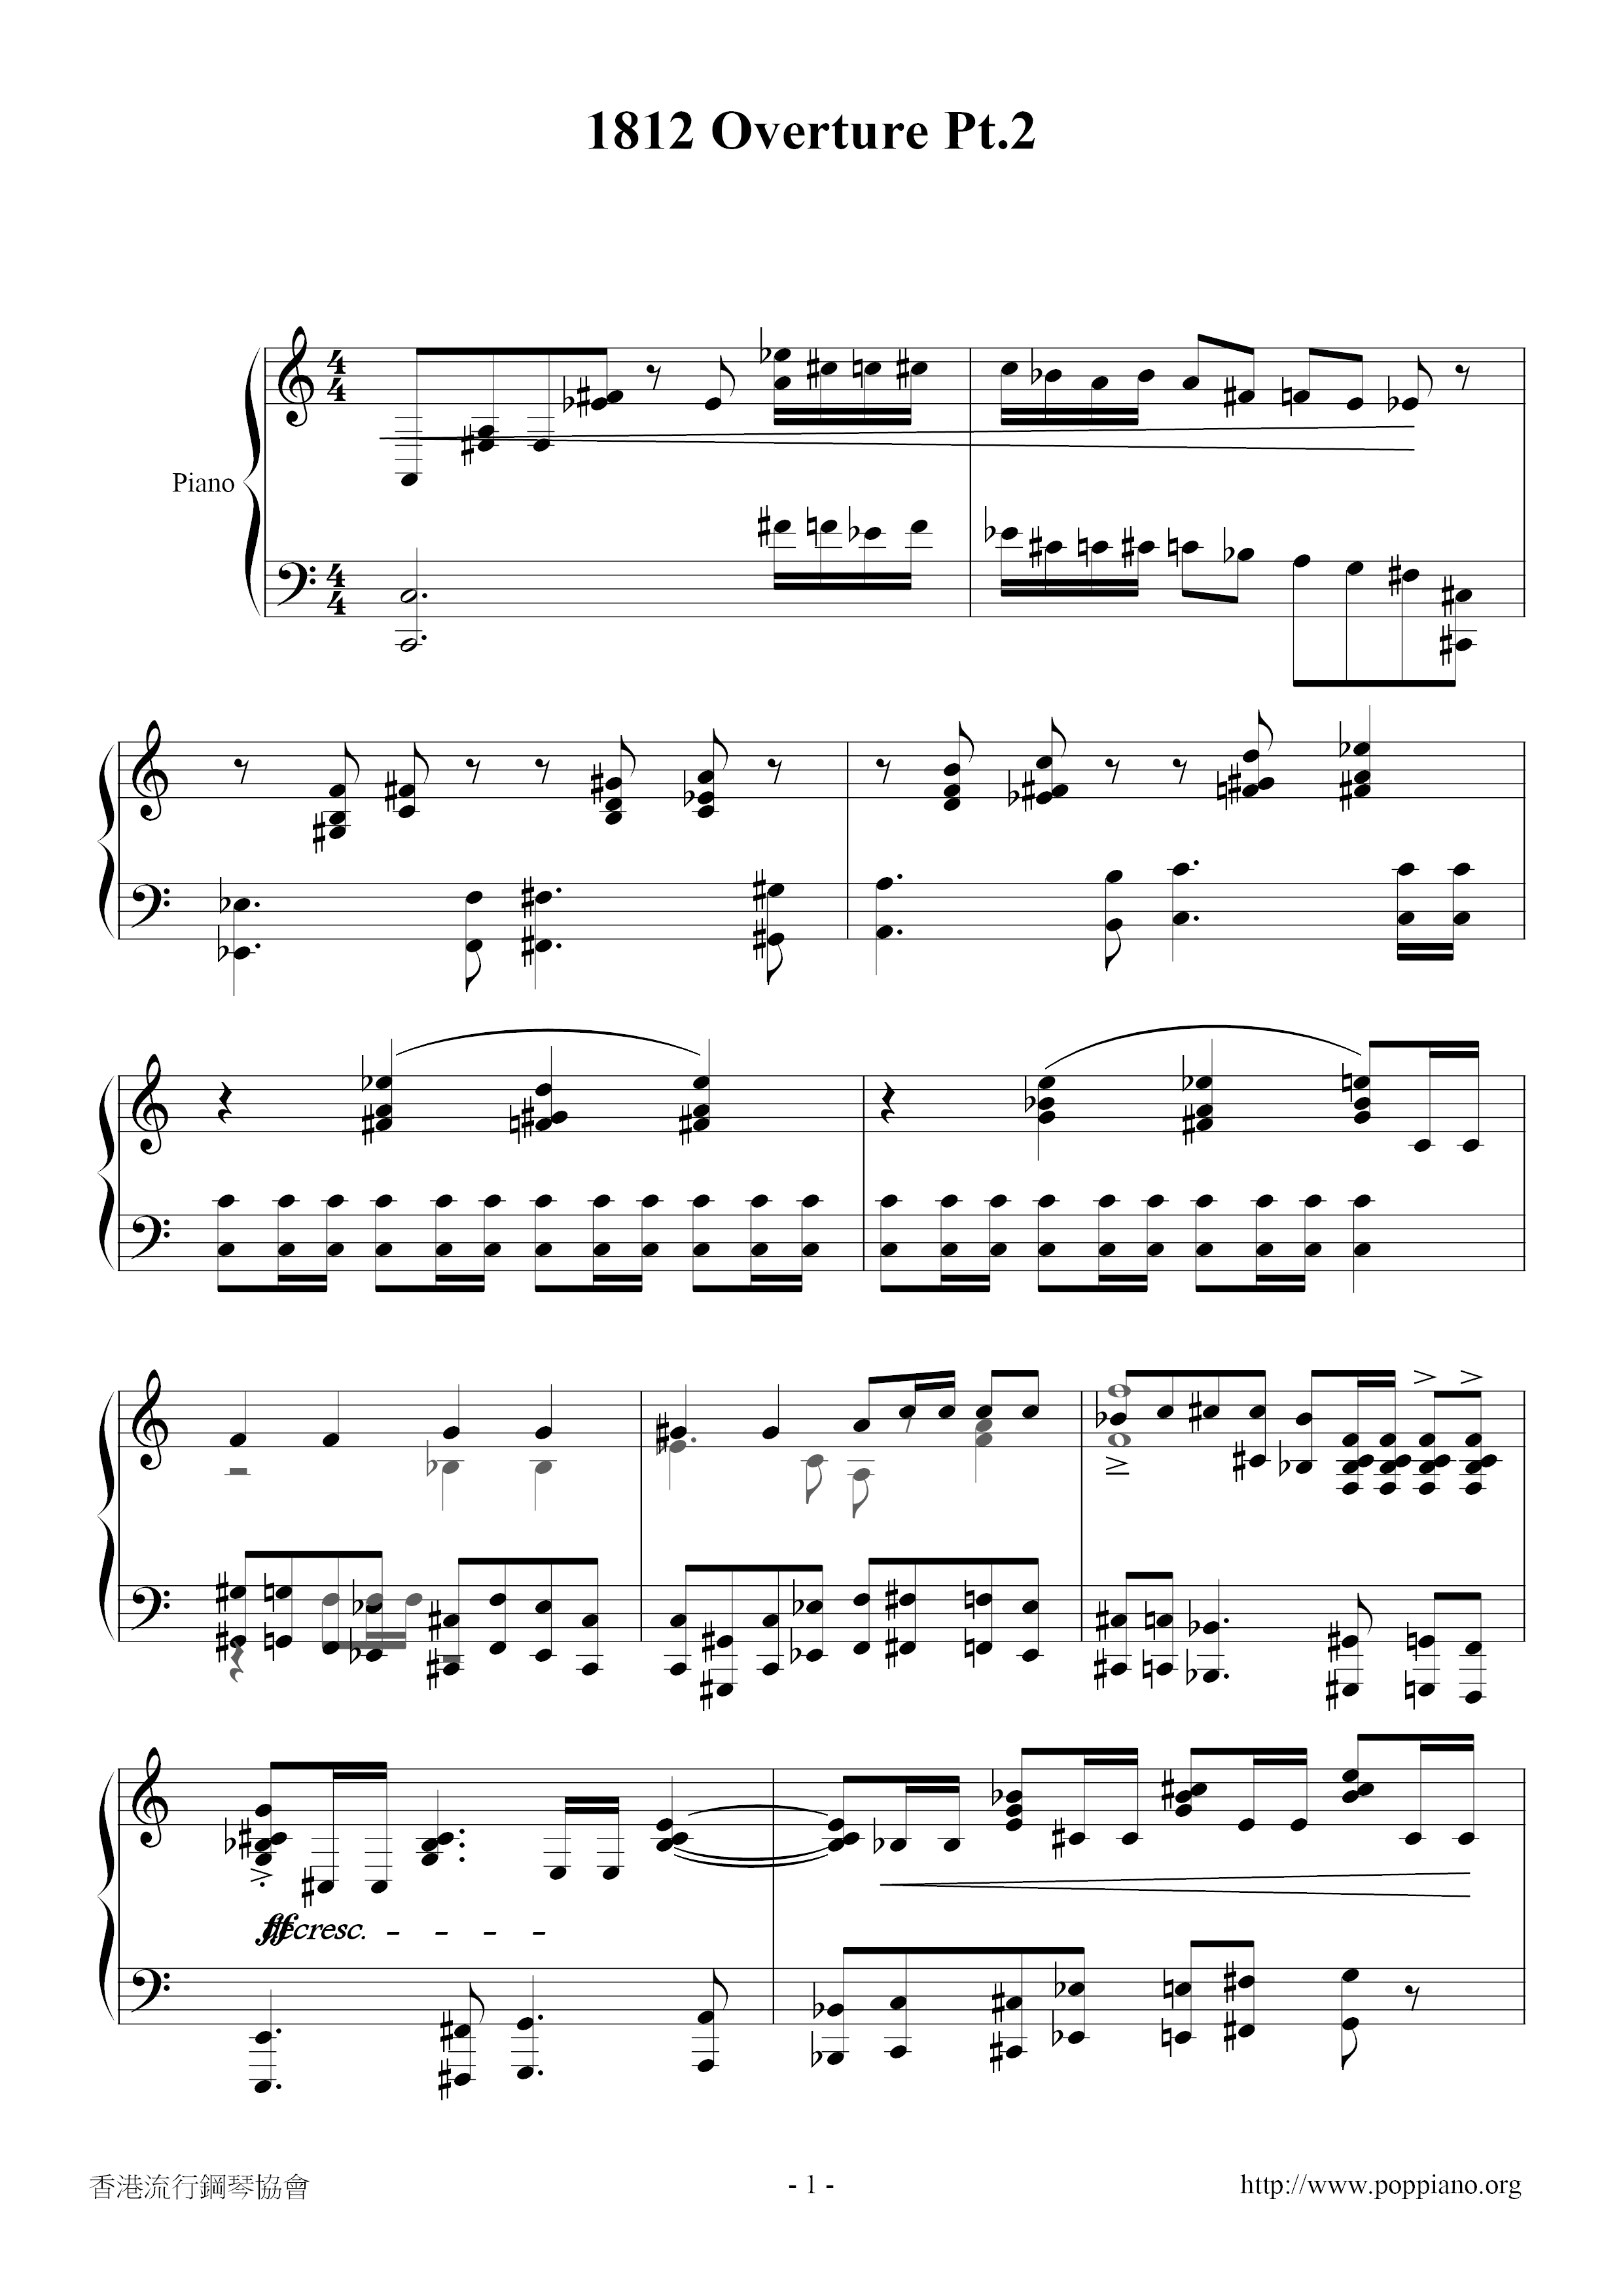 1812 overture pt.2ピアノ譜